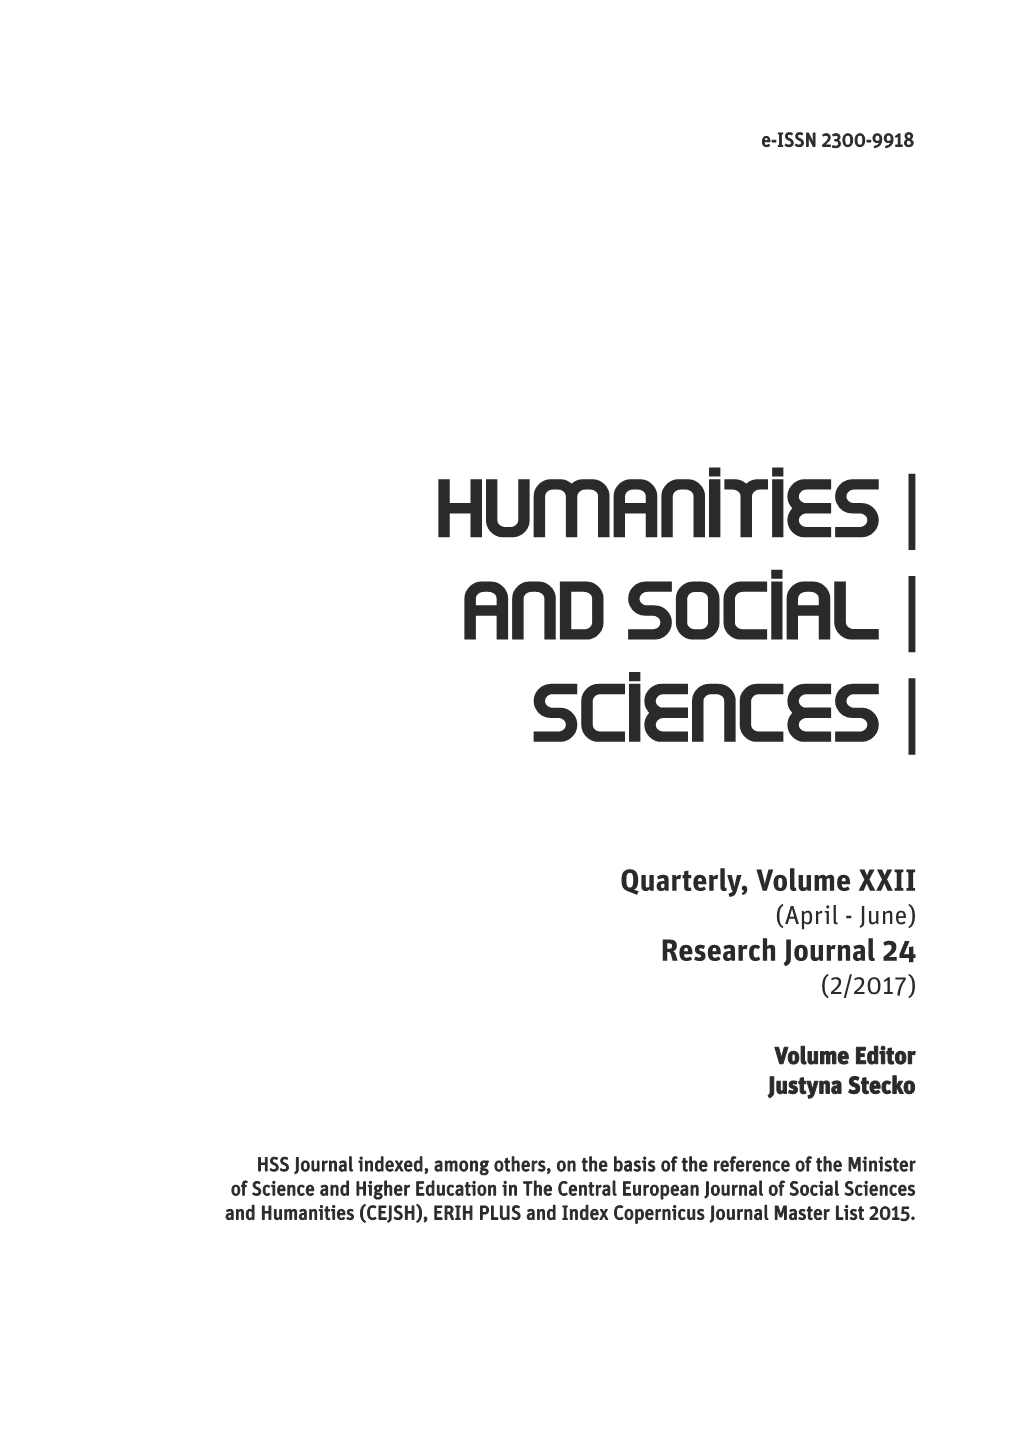 Quarterly, Volume XXII Research Journal 24